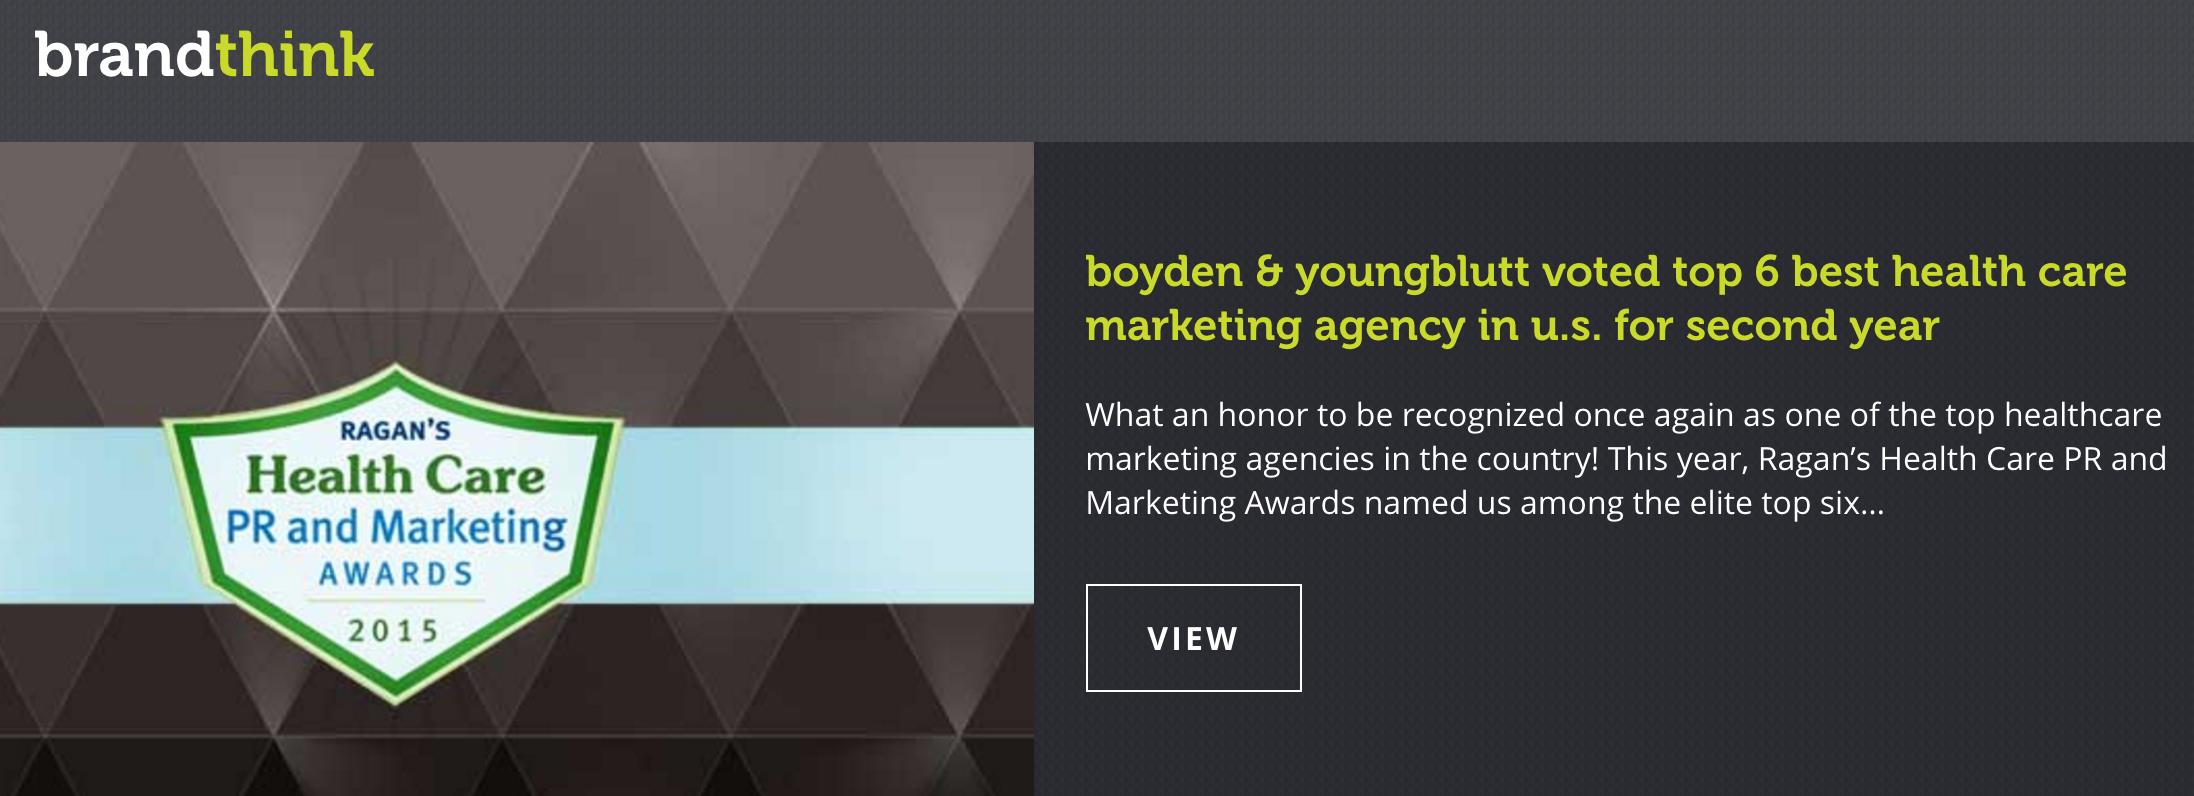 BrandThink | Boyden & Youngblutt - Marketing & Advertising Agency